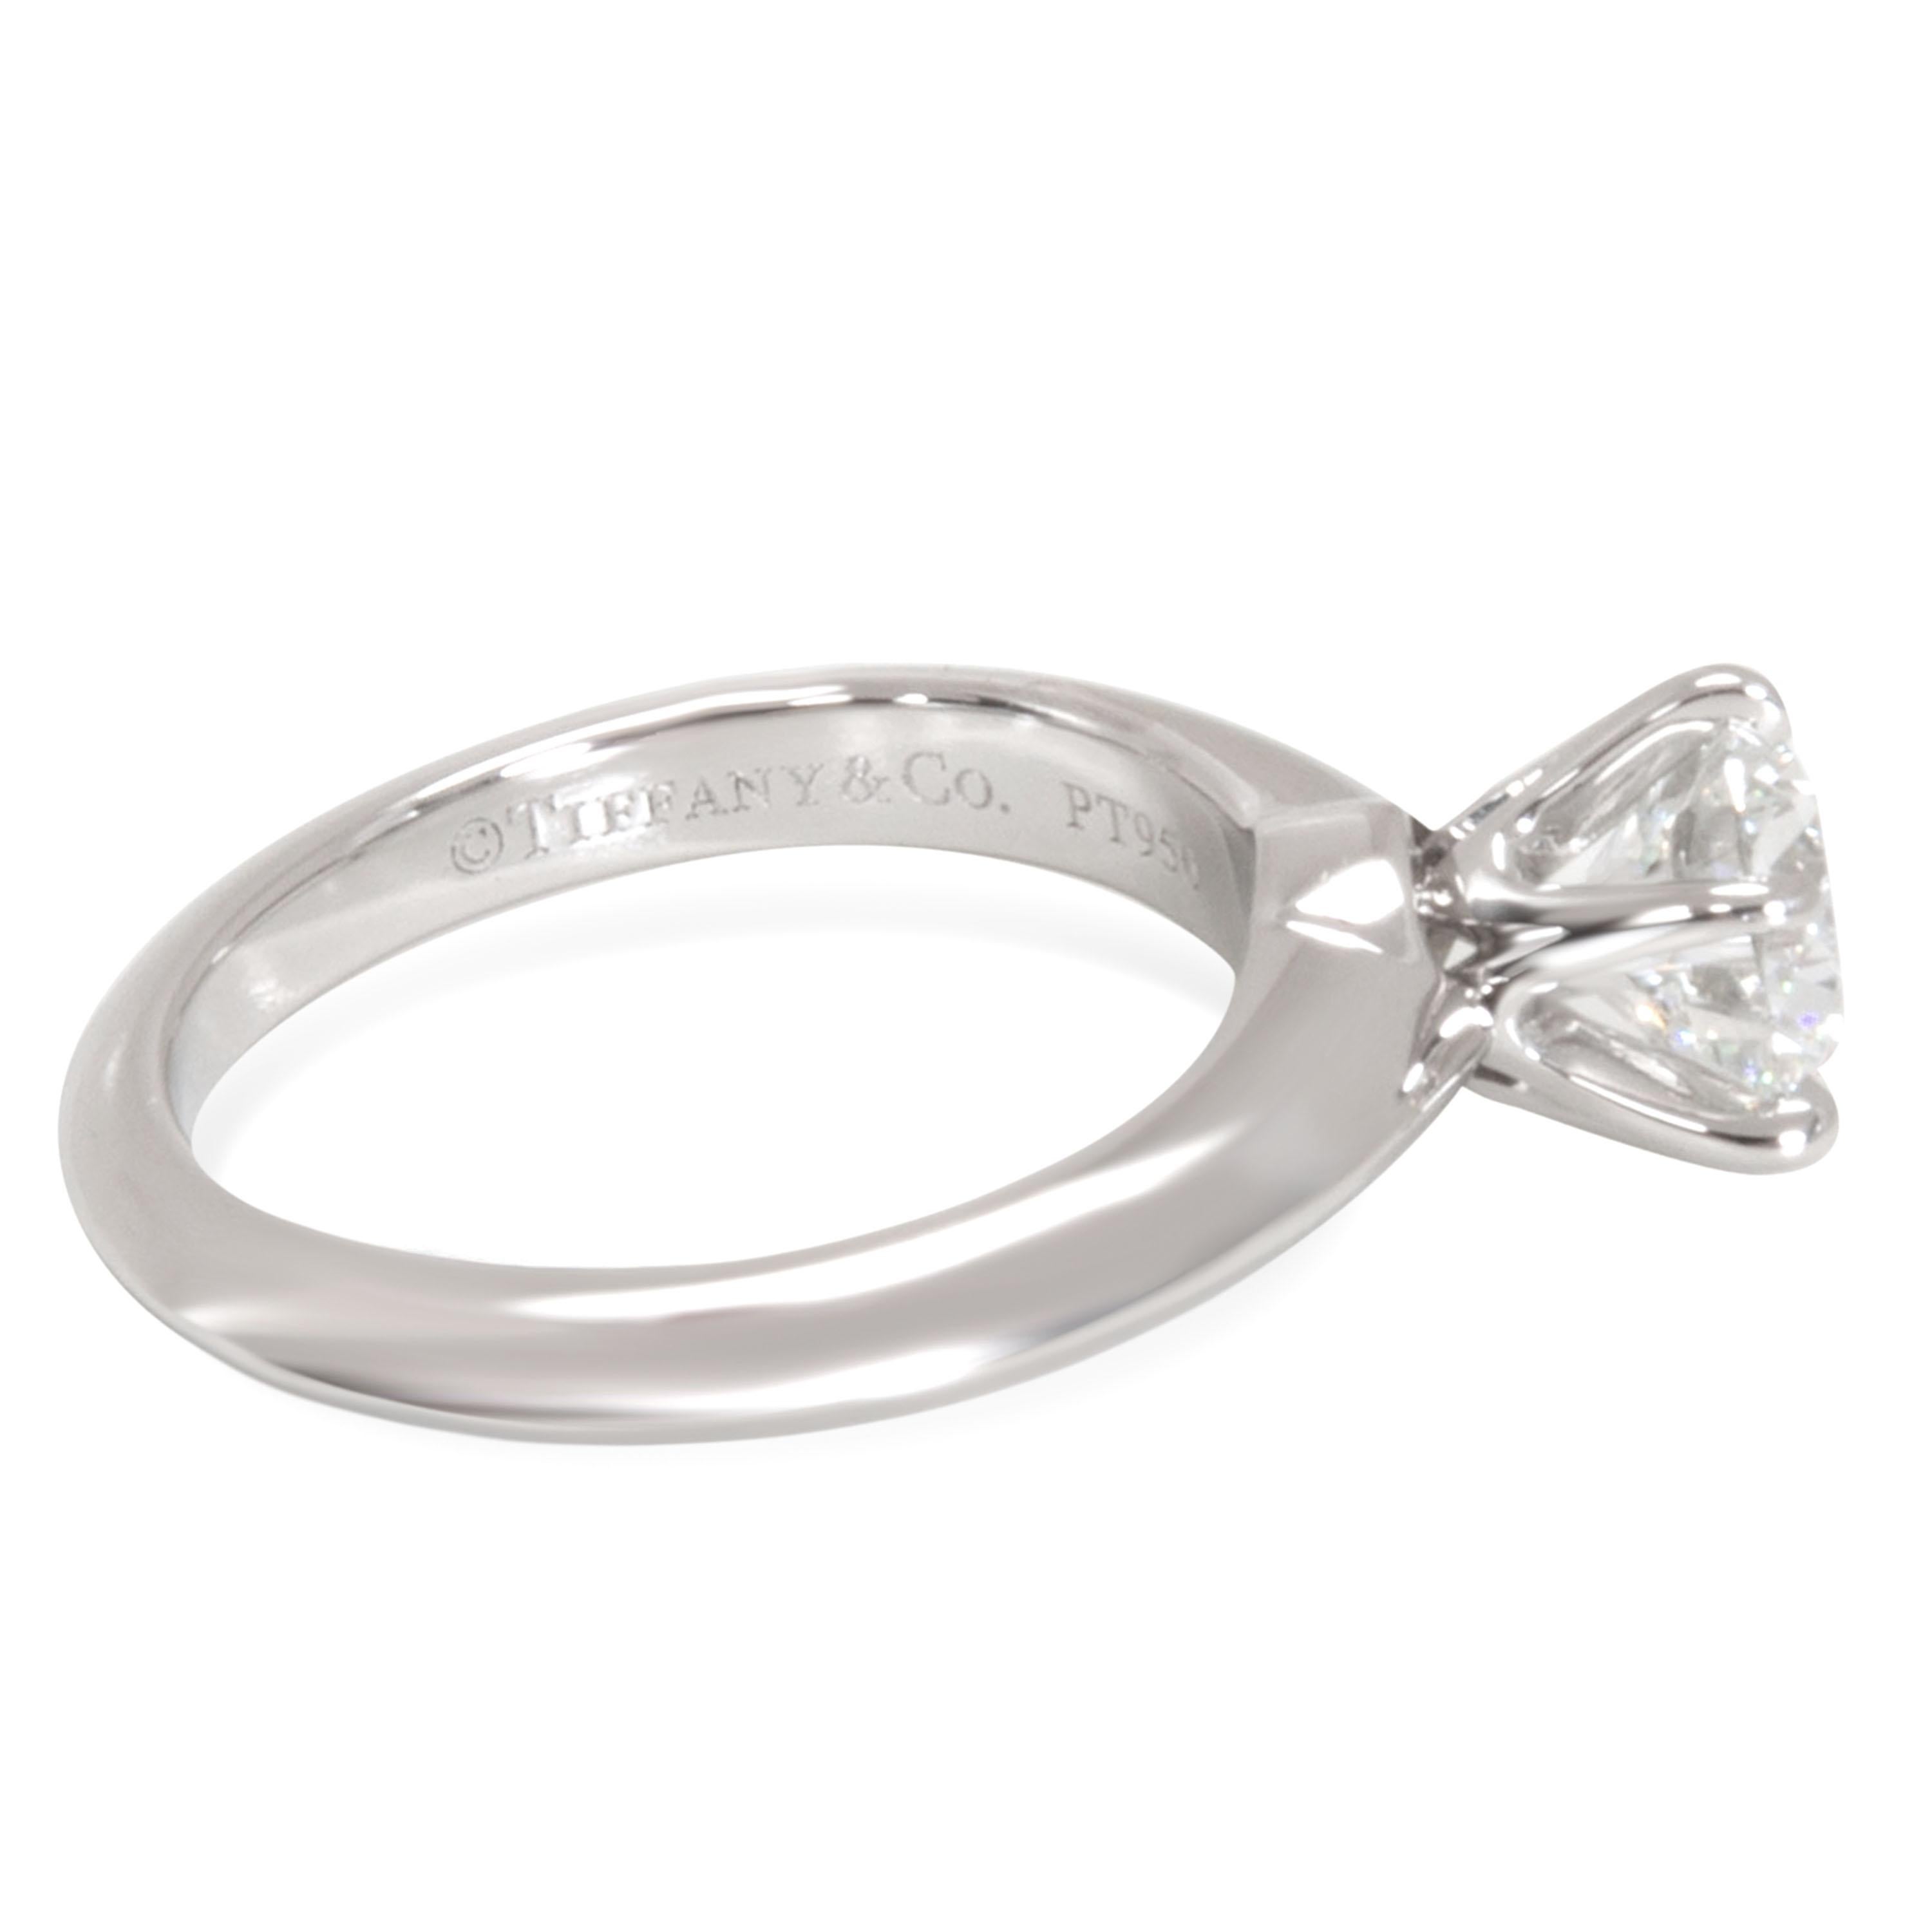 Round Cut Tiffany & Co. Diamond Solitaire Engagement Ring in Platinum 'F/VVS1' 0.93 Carat